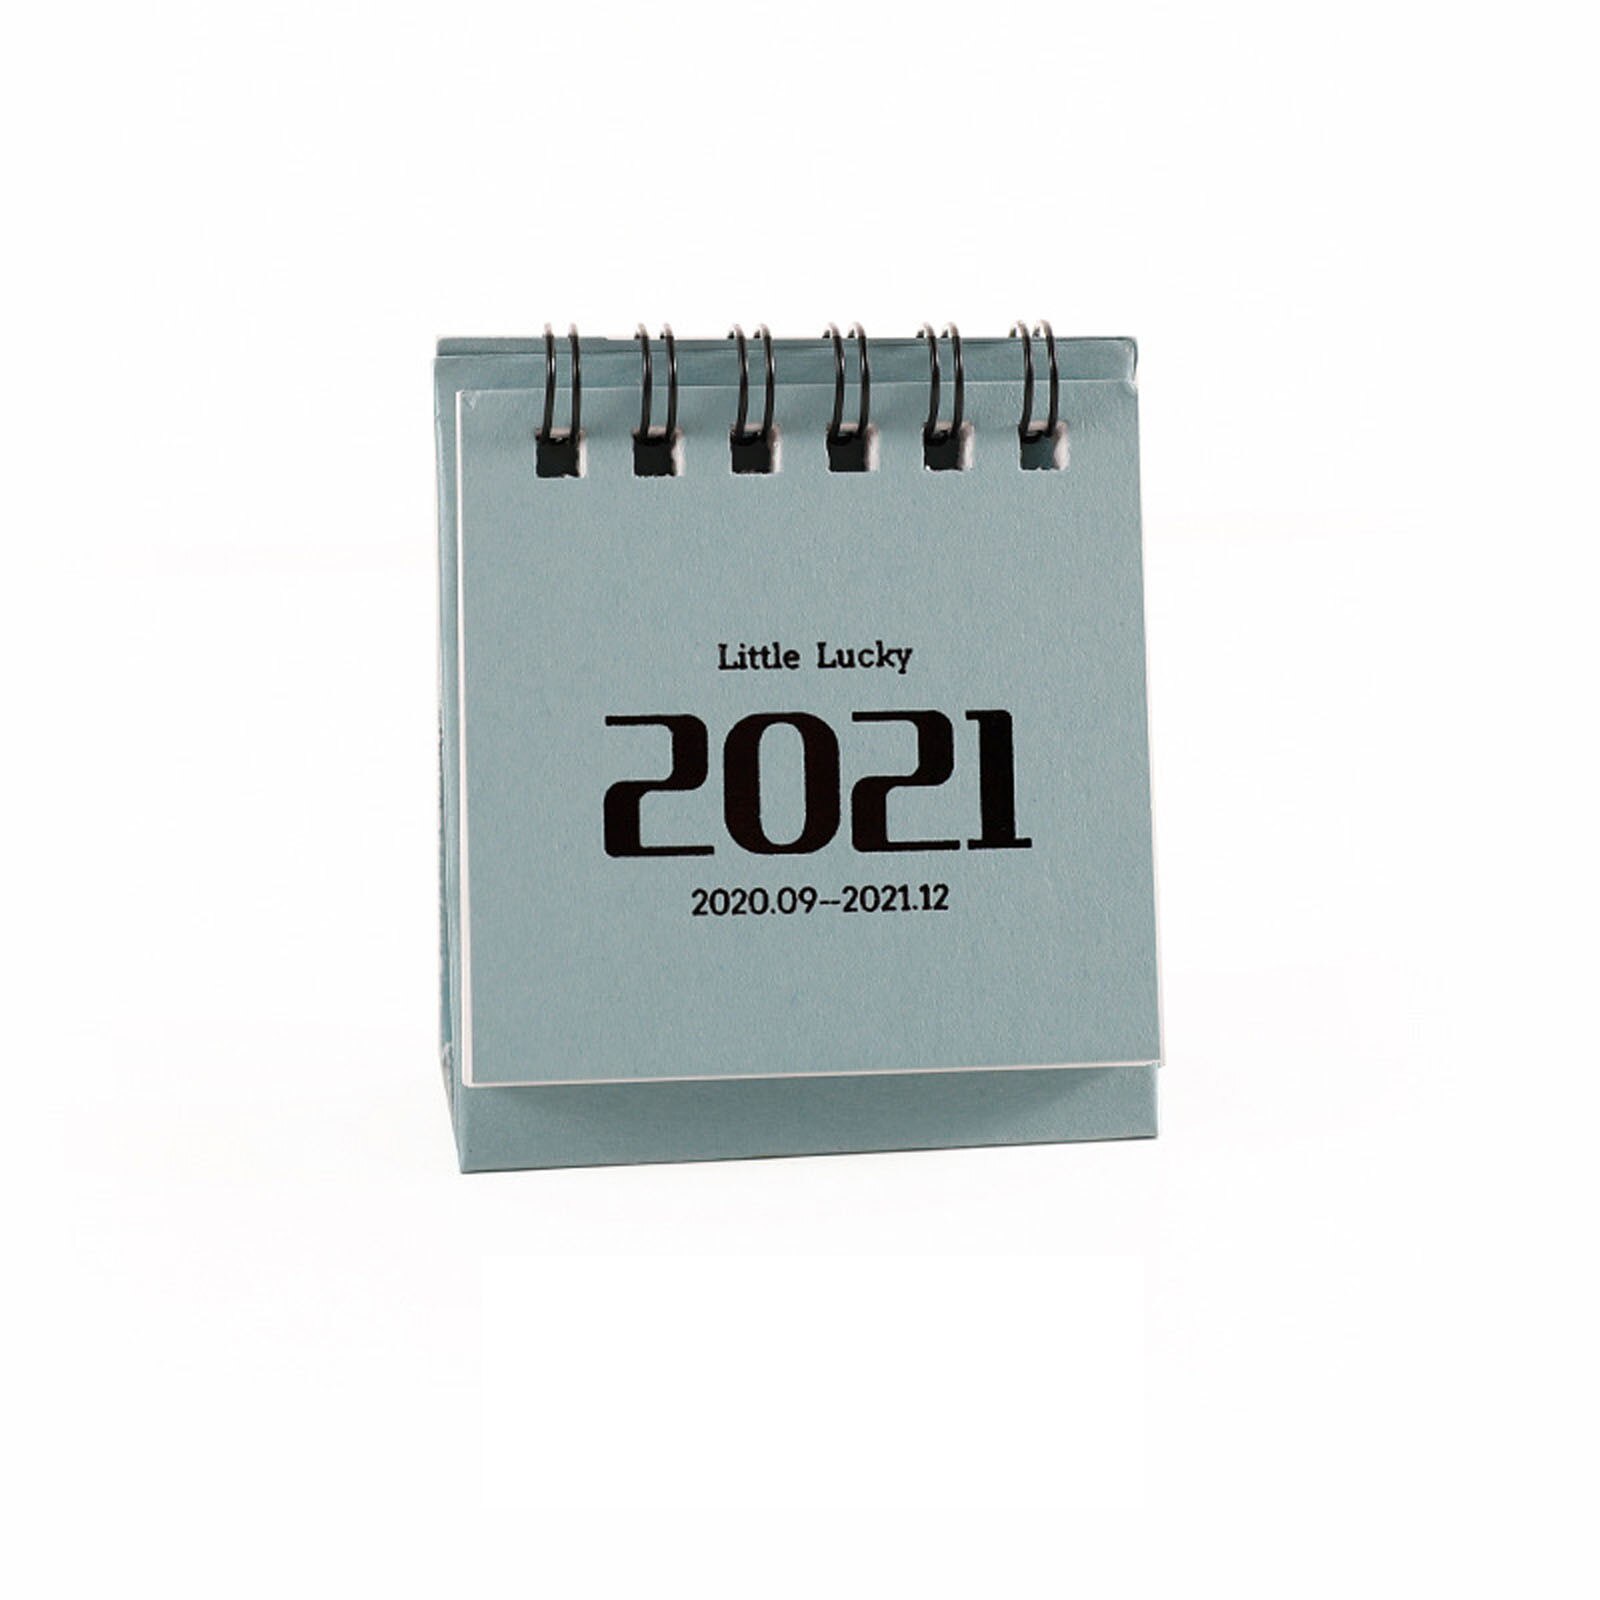 S# Calendar Mini Desk Calendar Stand Up Flip Calendar Daily Monthly Table Planner Calendario Адвент Календарь